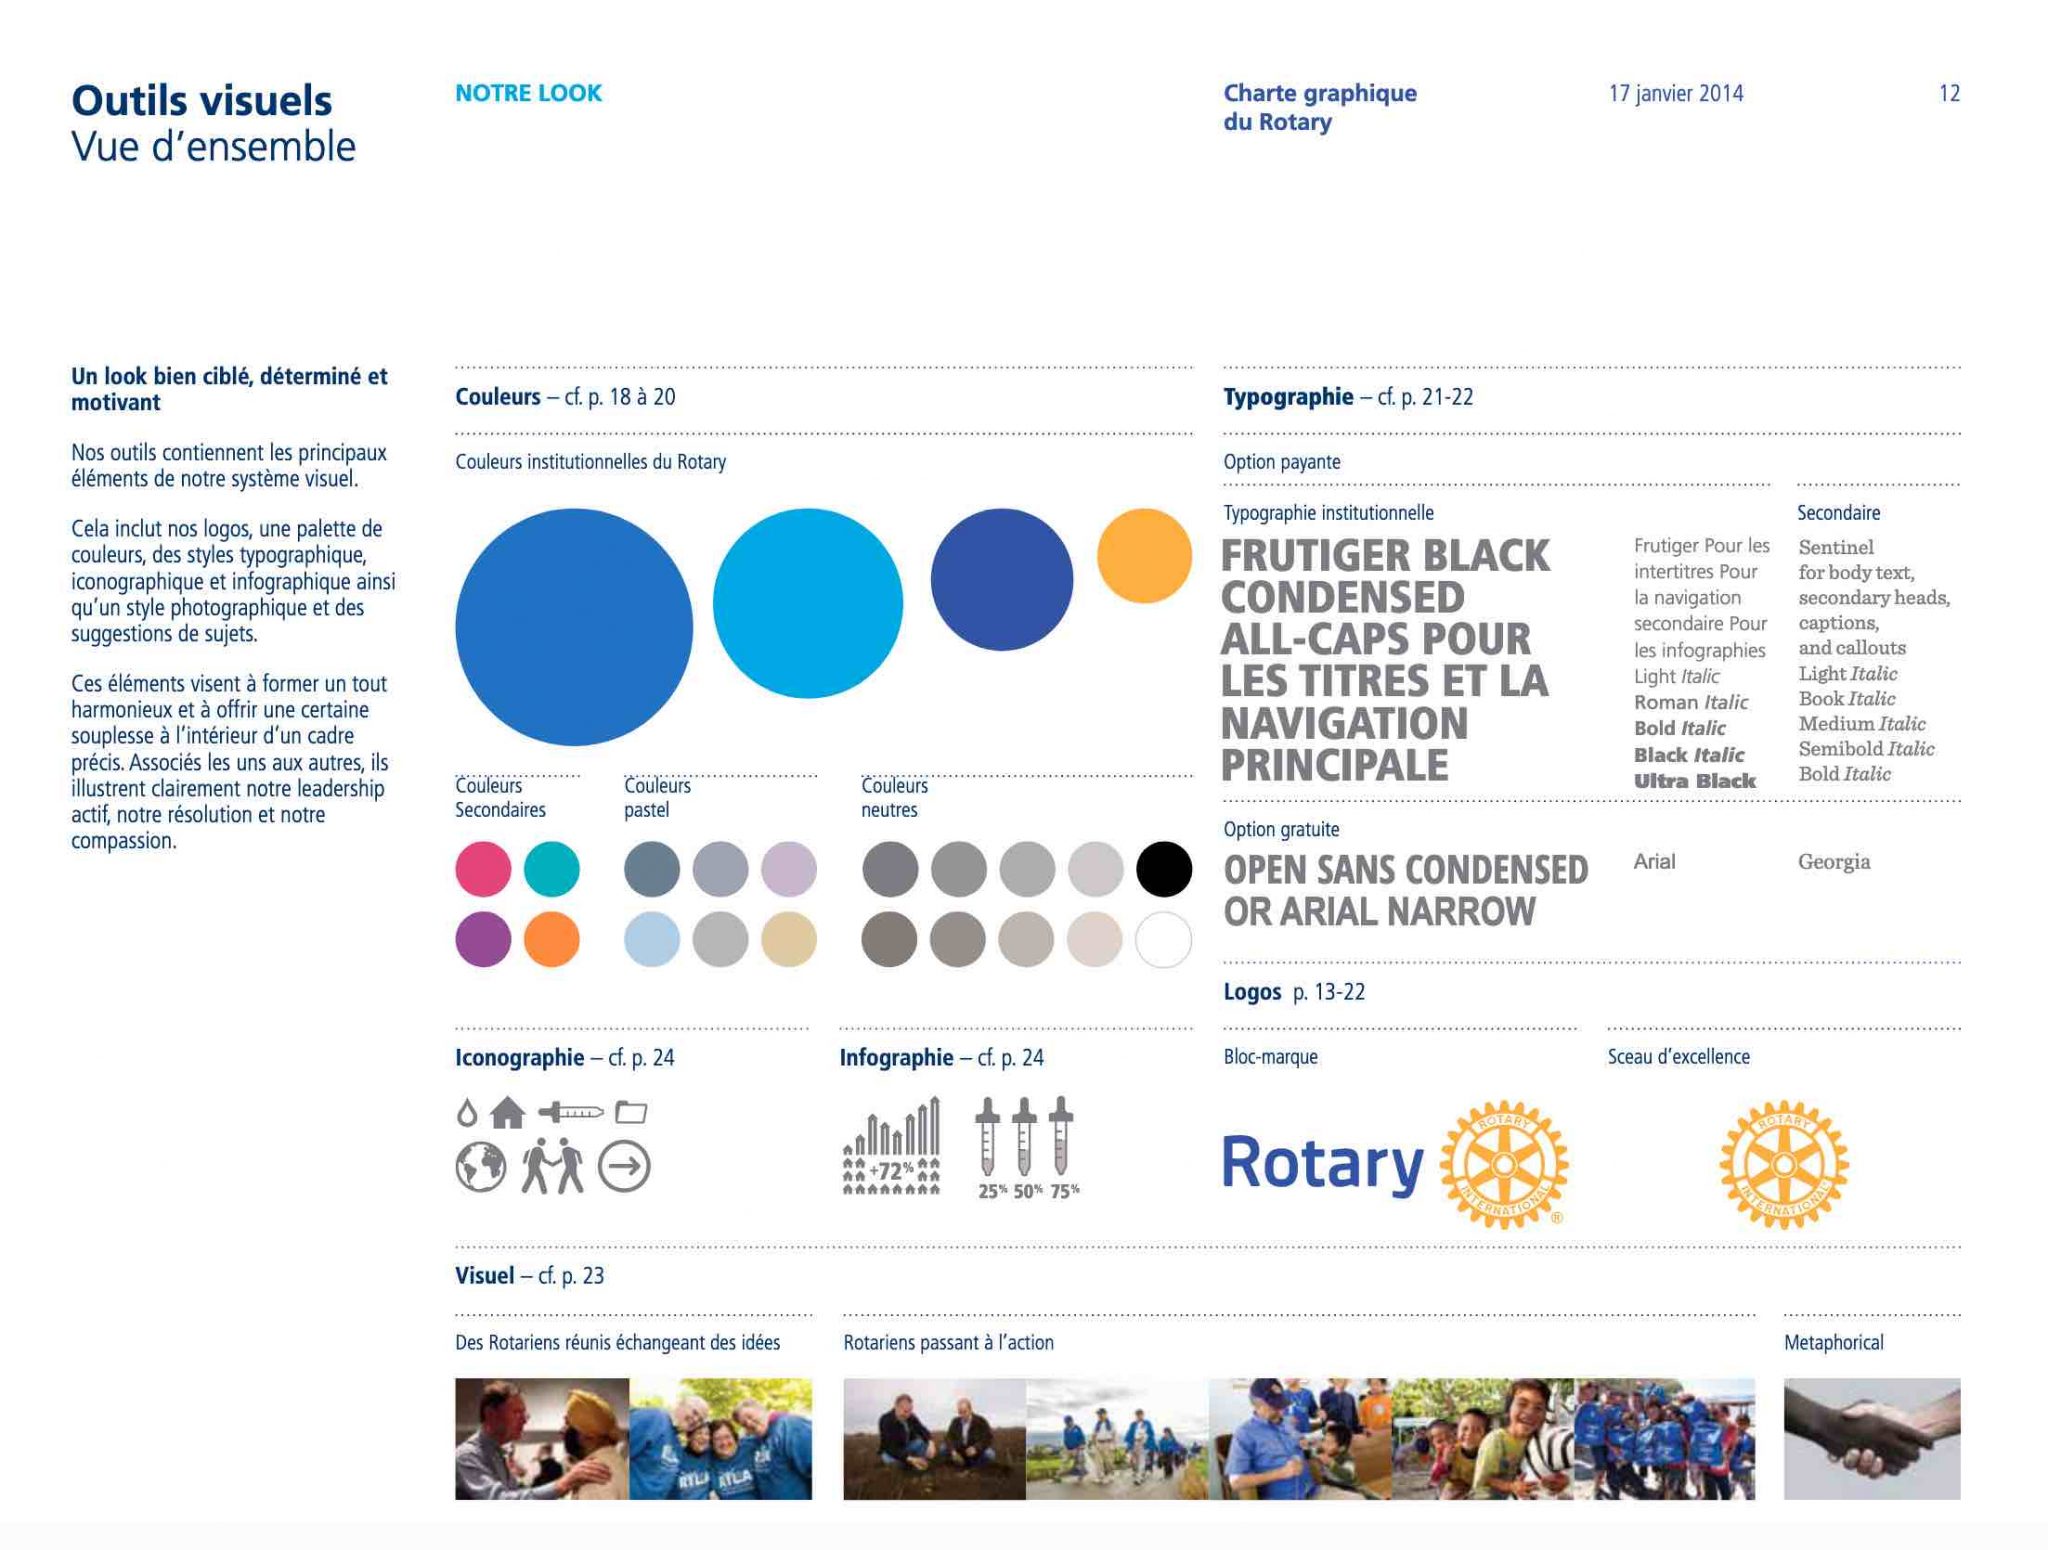 La charte graphique du Rotary International